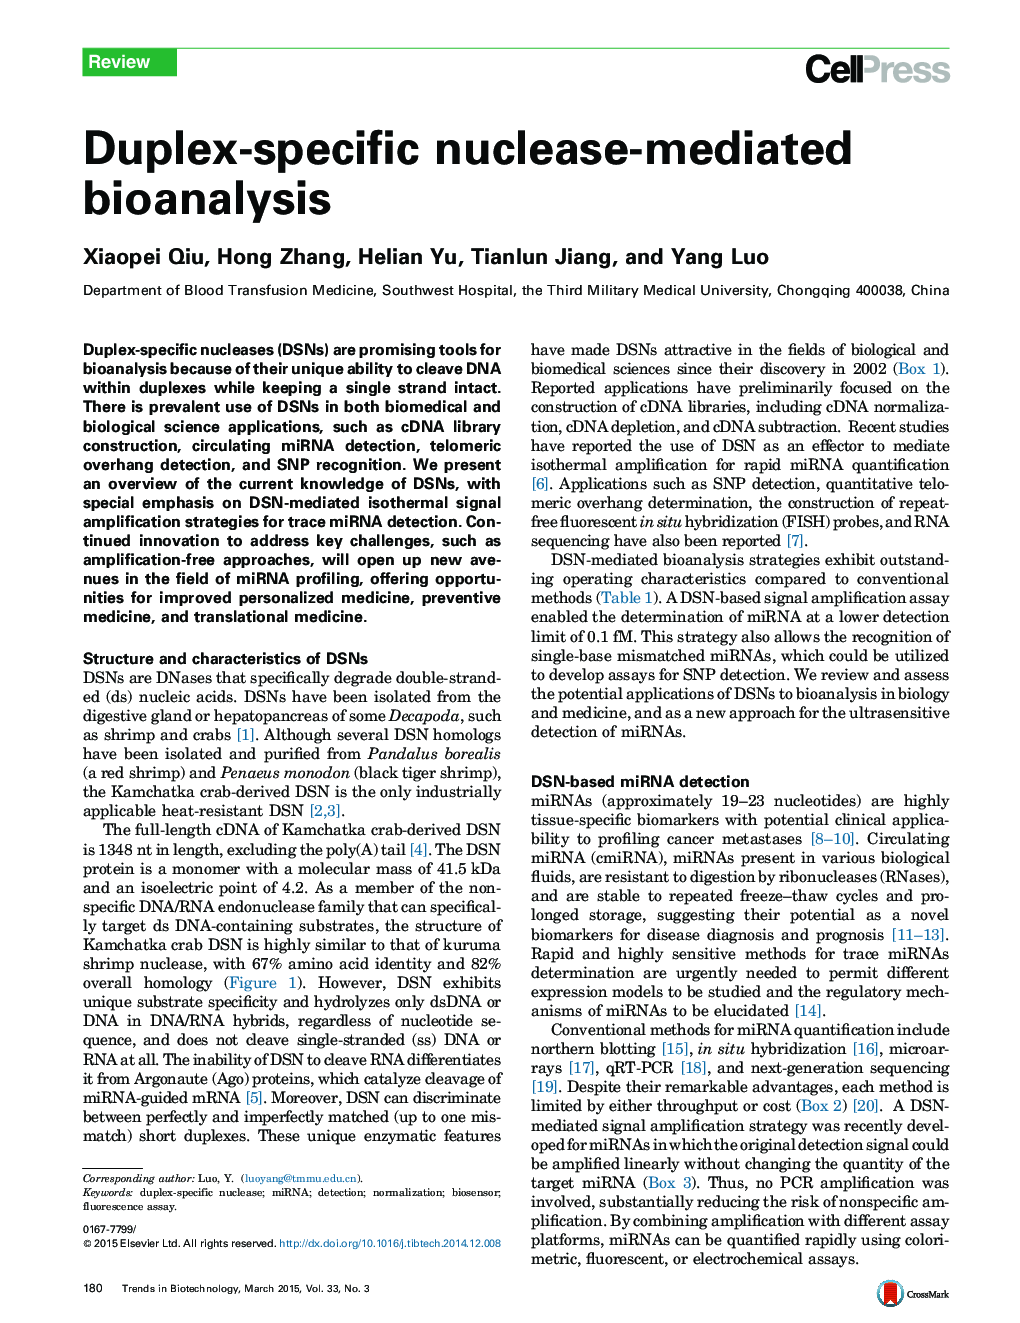 Duplex-specific nuclease-mediated bioanalysis